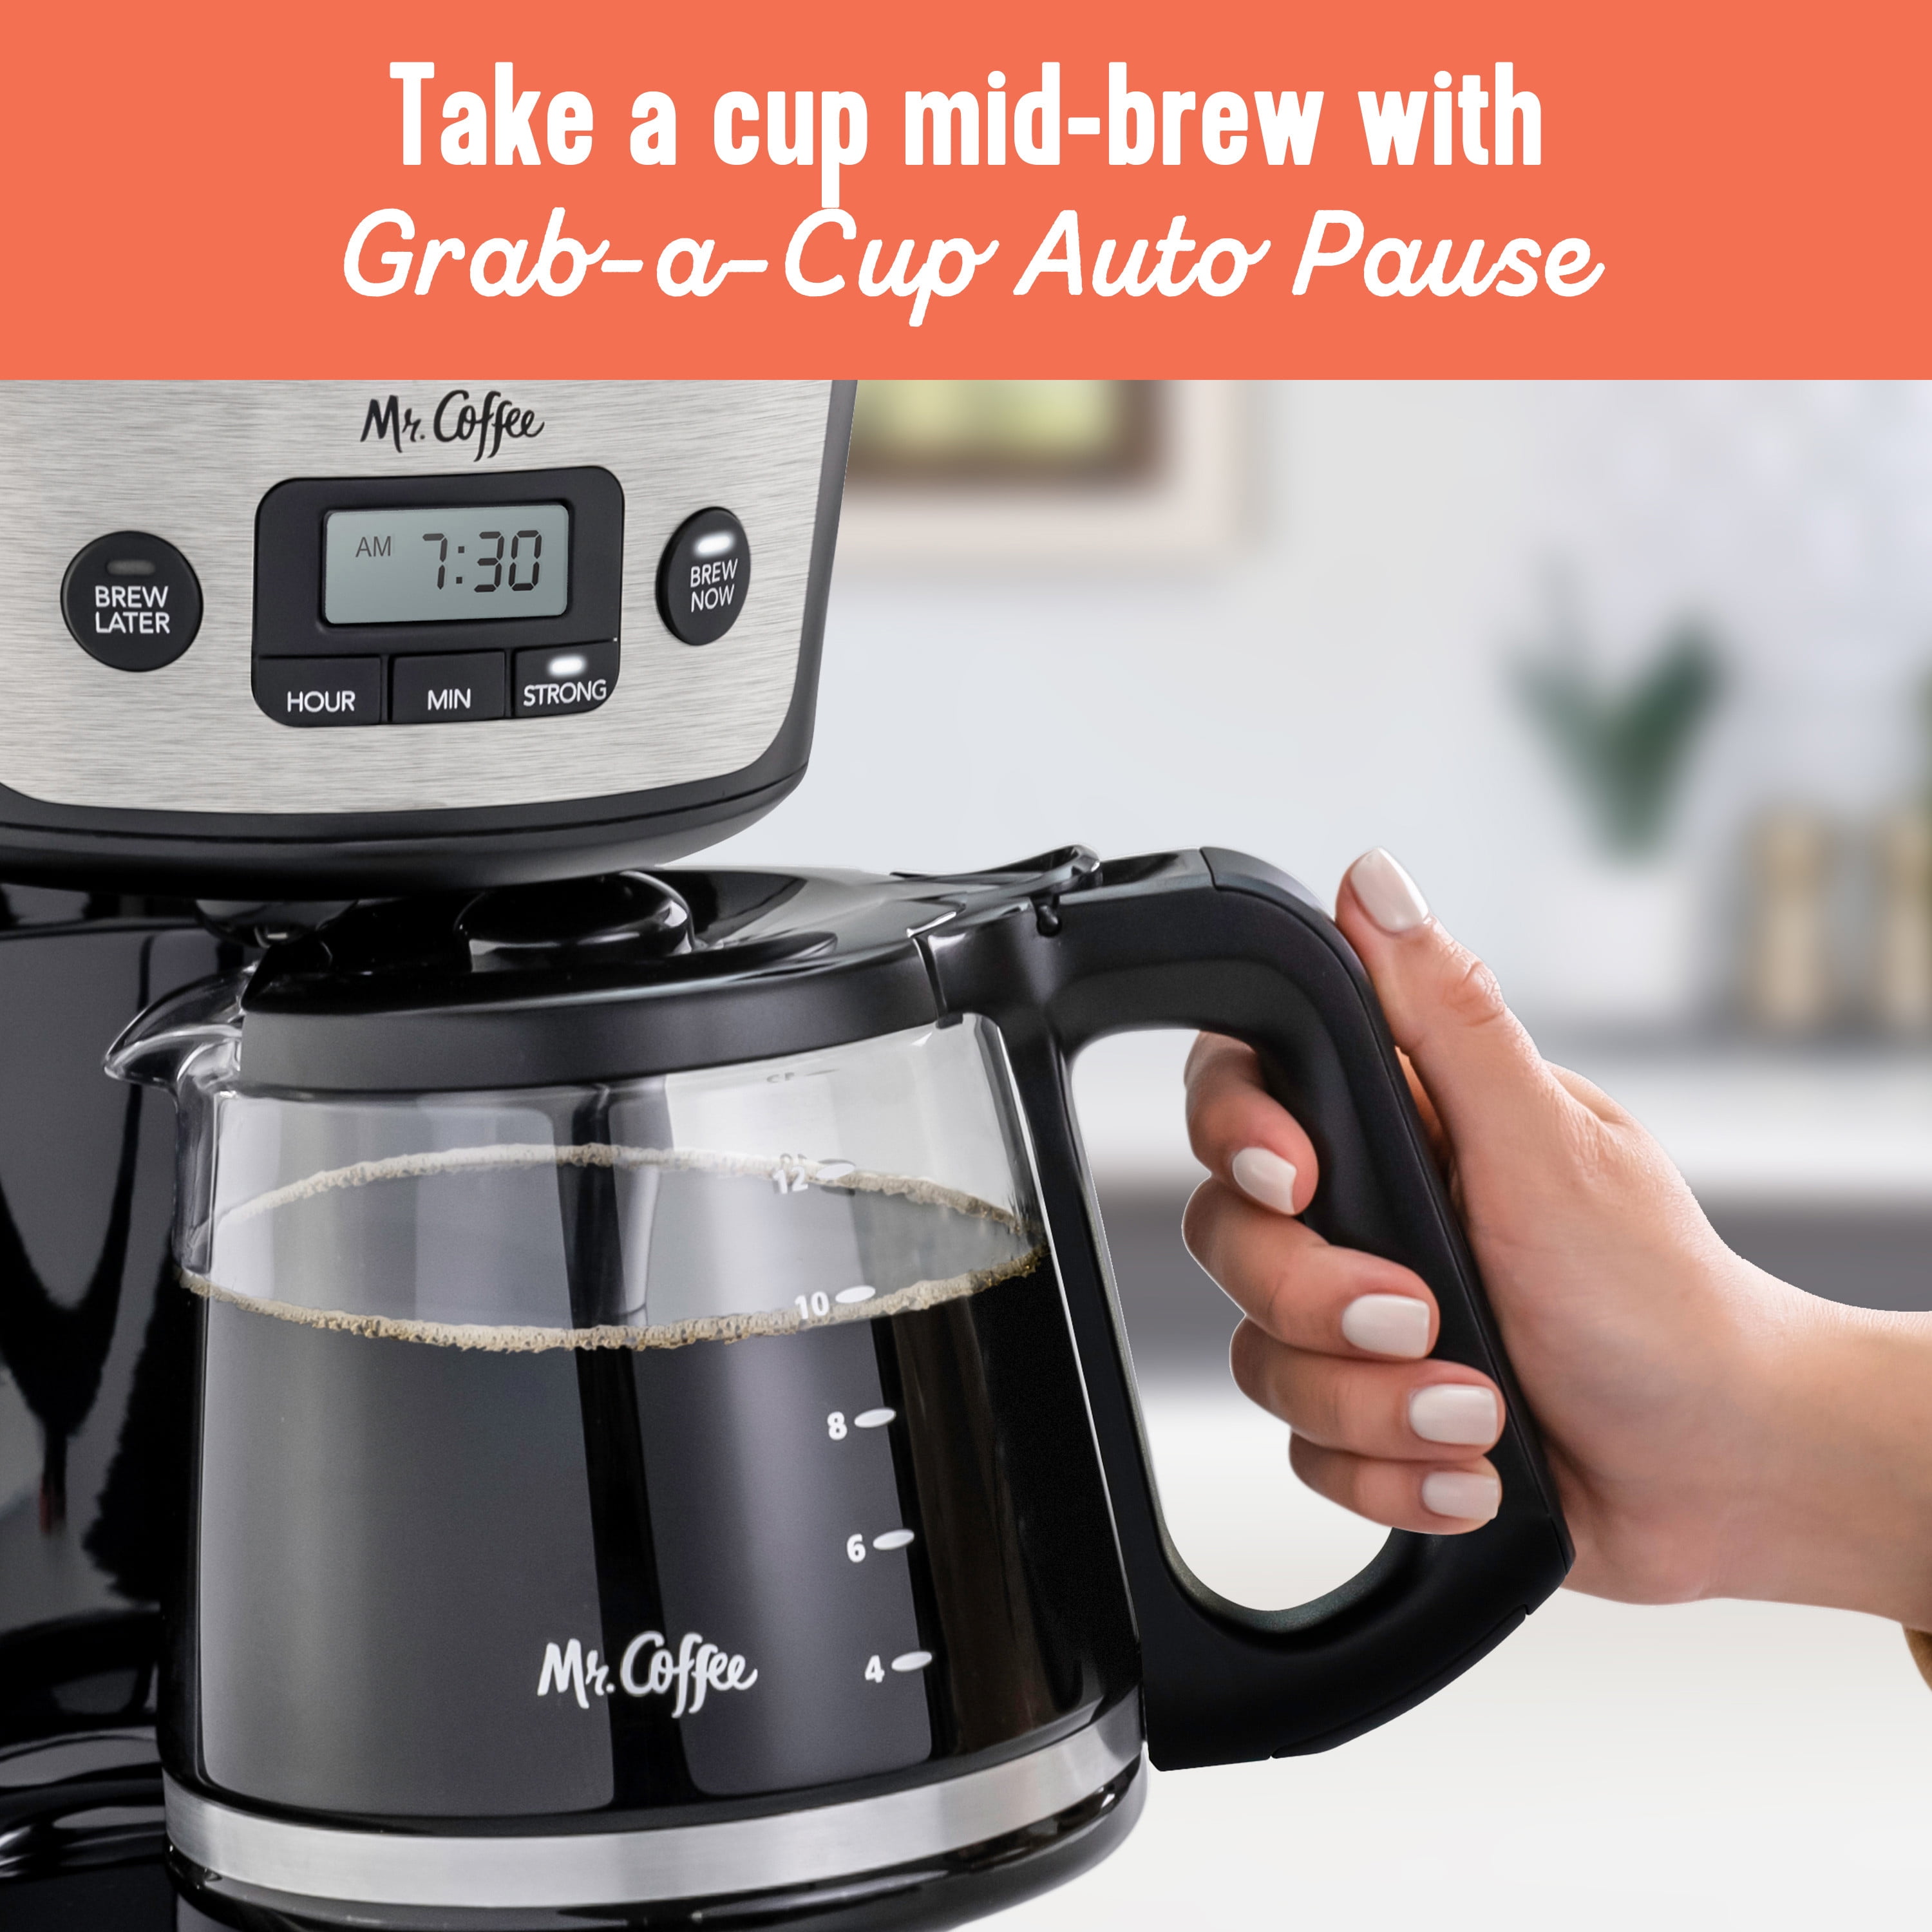 Mr. Coffee 12-cup Programmable Coffeemaker